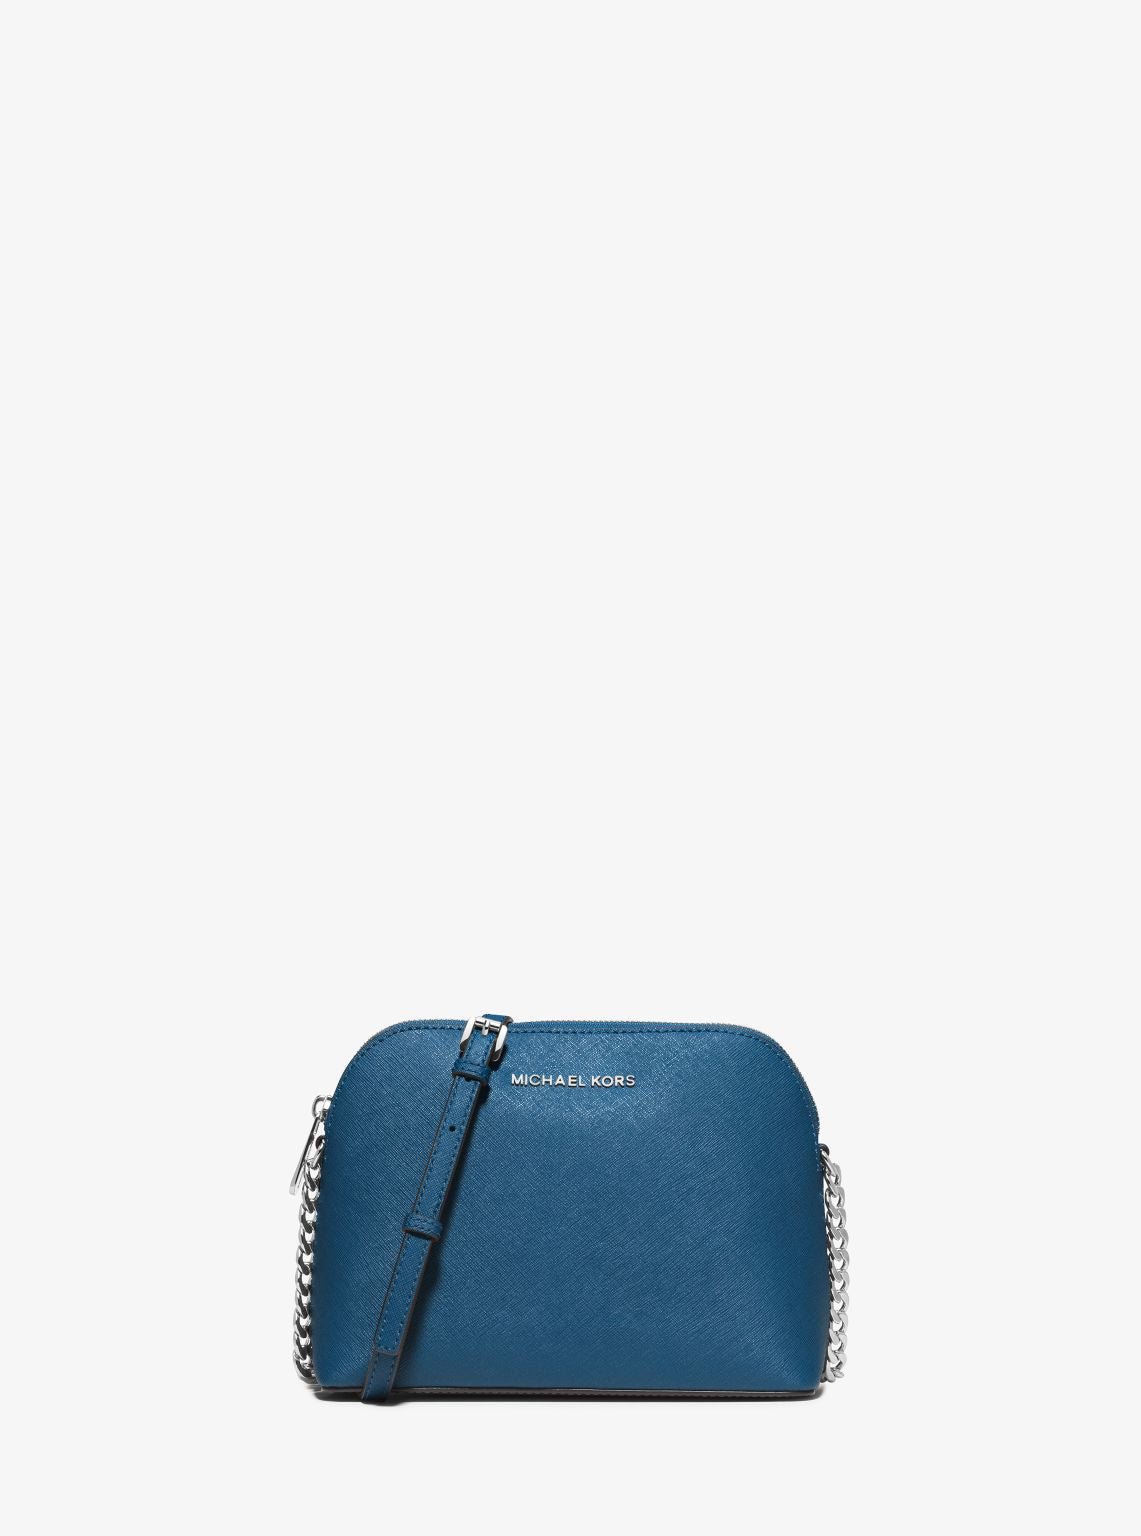 Cindy Large Saffiano Leather Crossbody Bag